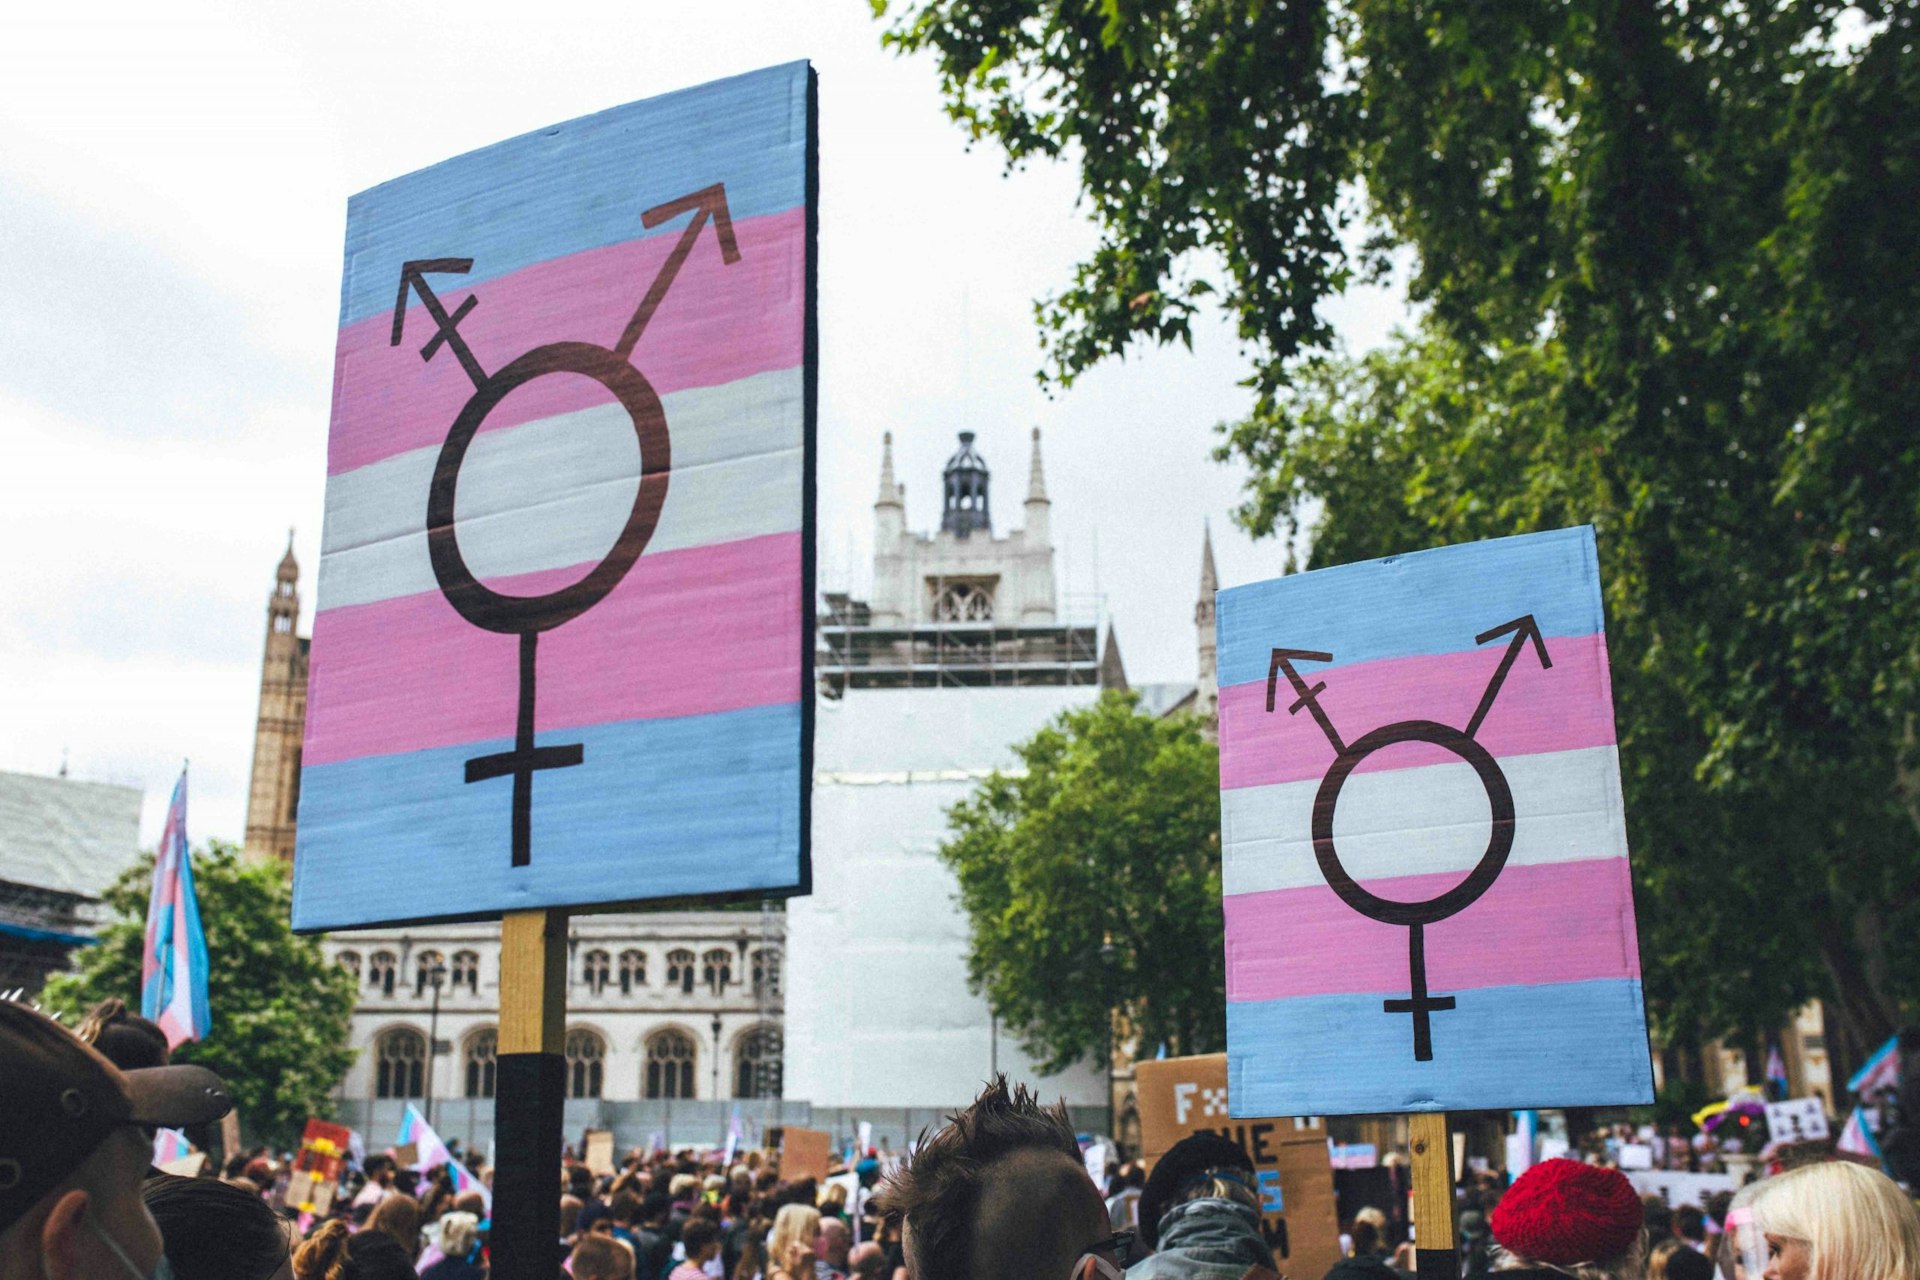 The UK's puberty blocker ruling endangers trans people